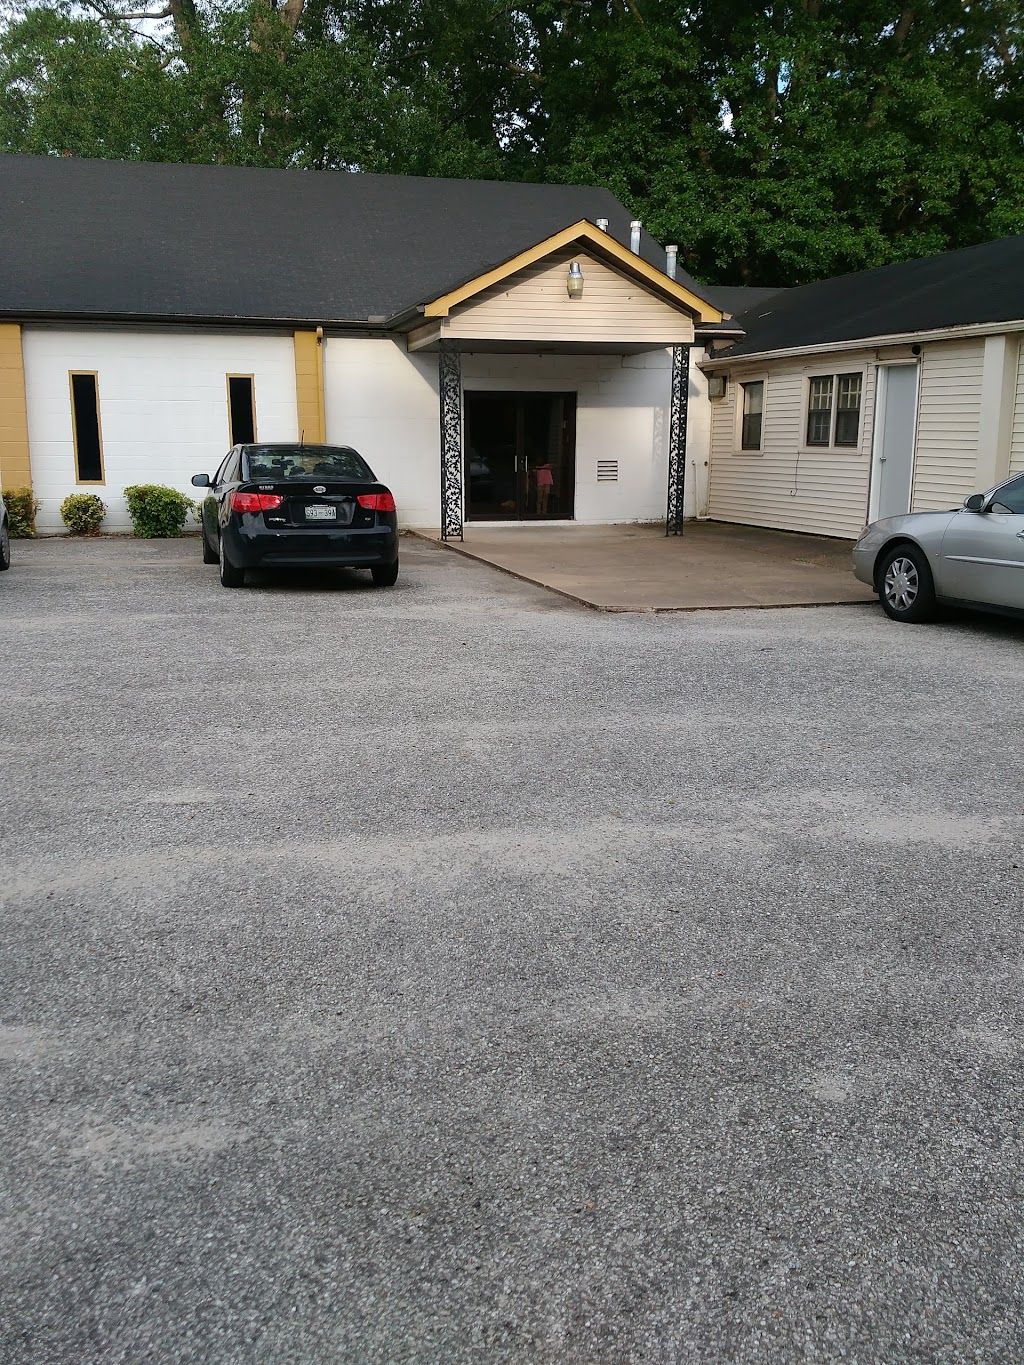 House of Prayer Ministry | 2786 Walnut Rd, Memphis, TN 38128, USA | Phone: (901) 388-0769